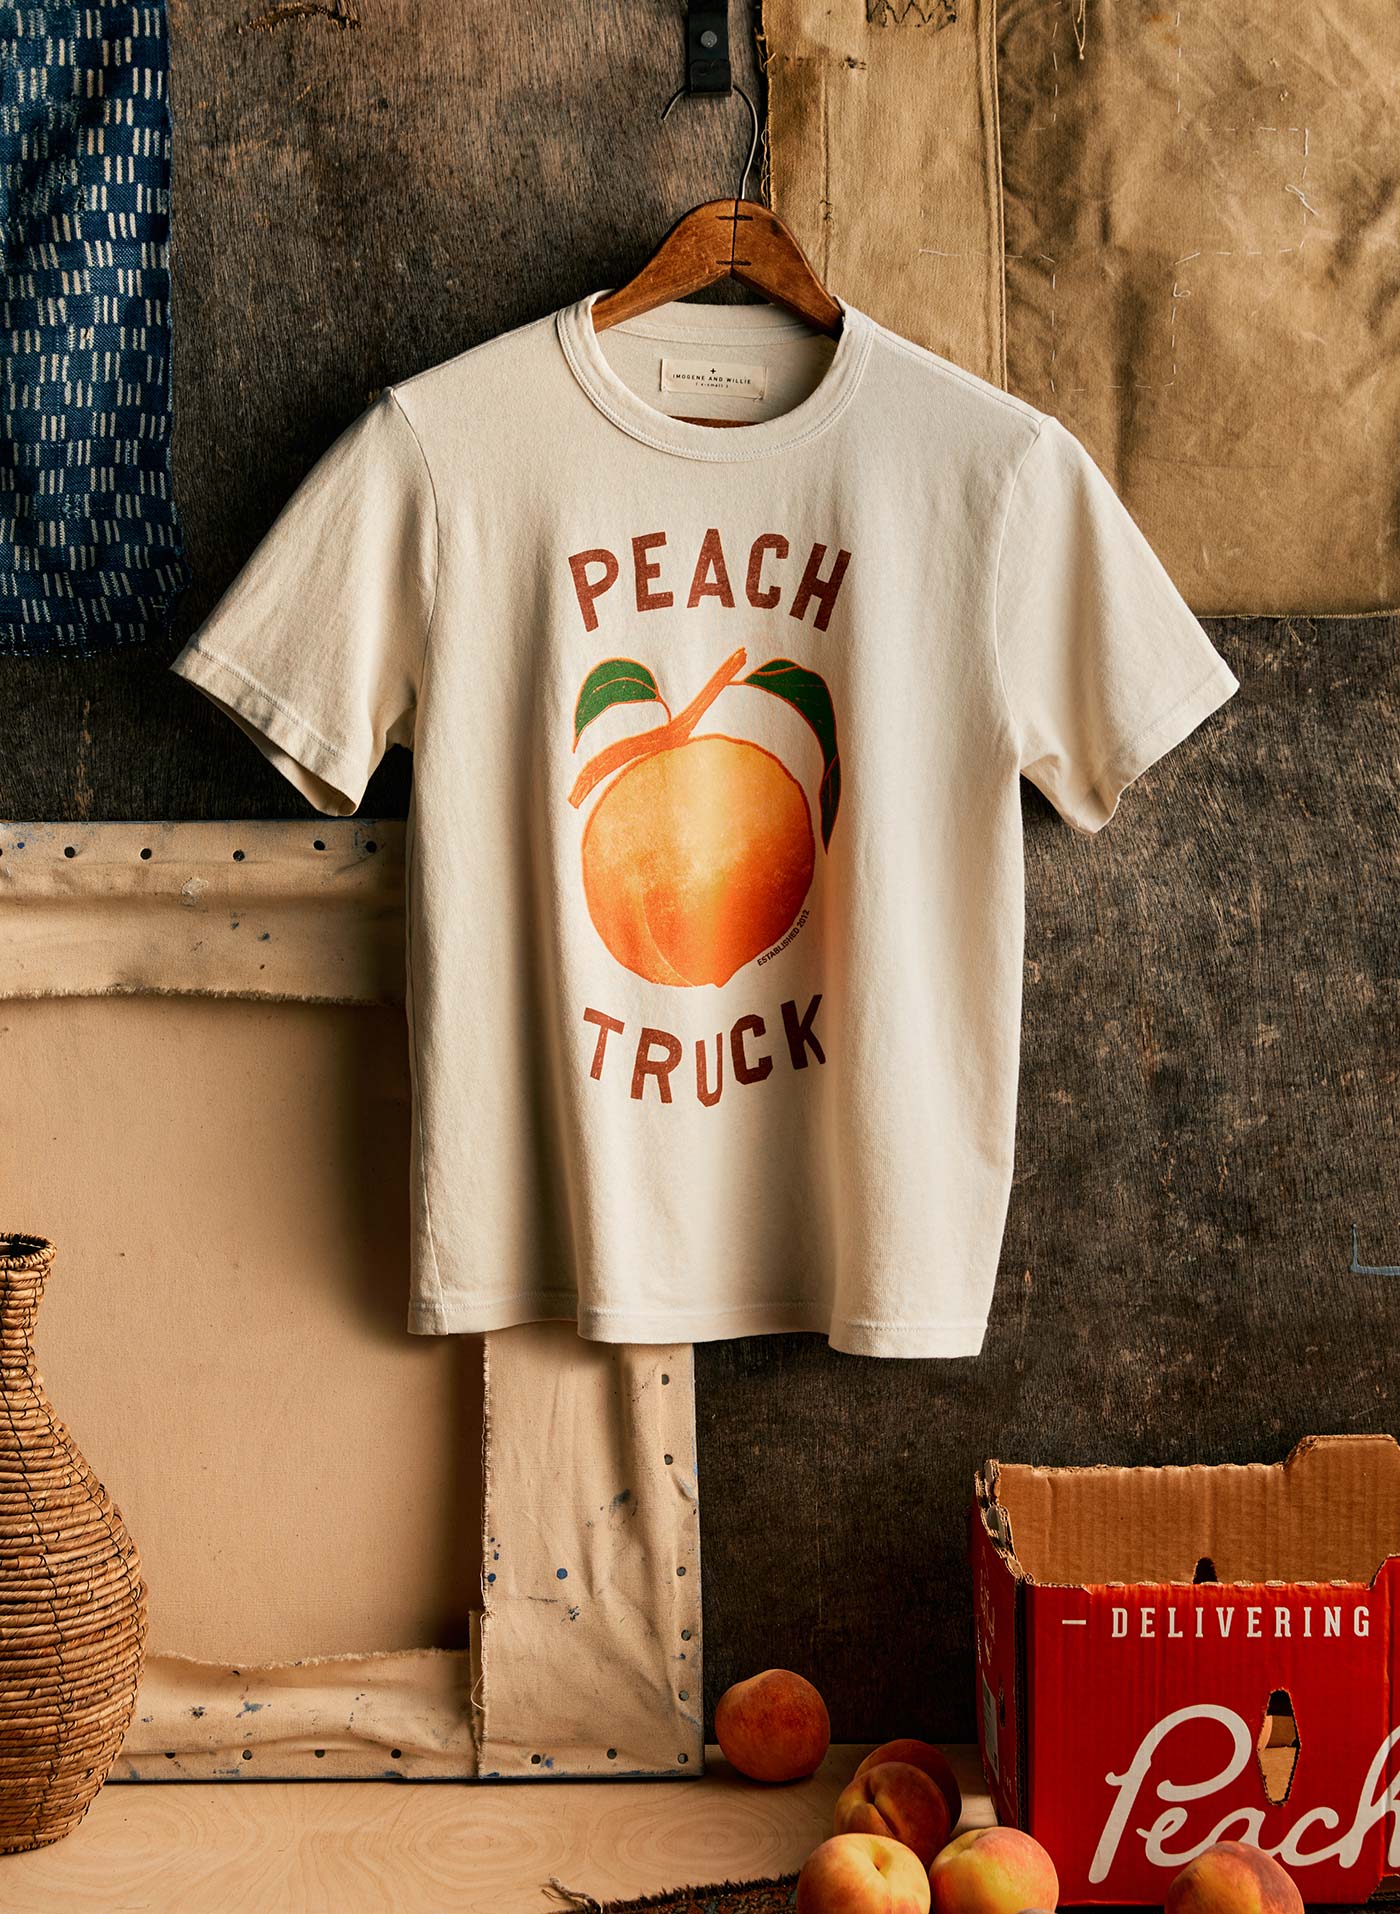 the "peach tee imogene + willie